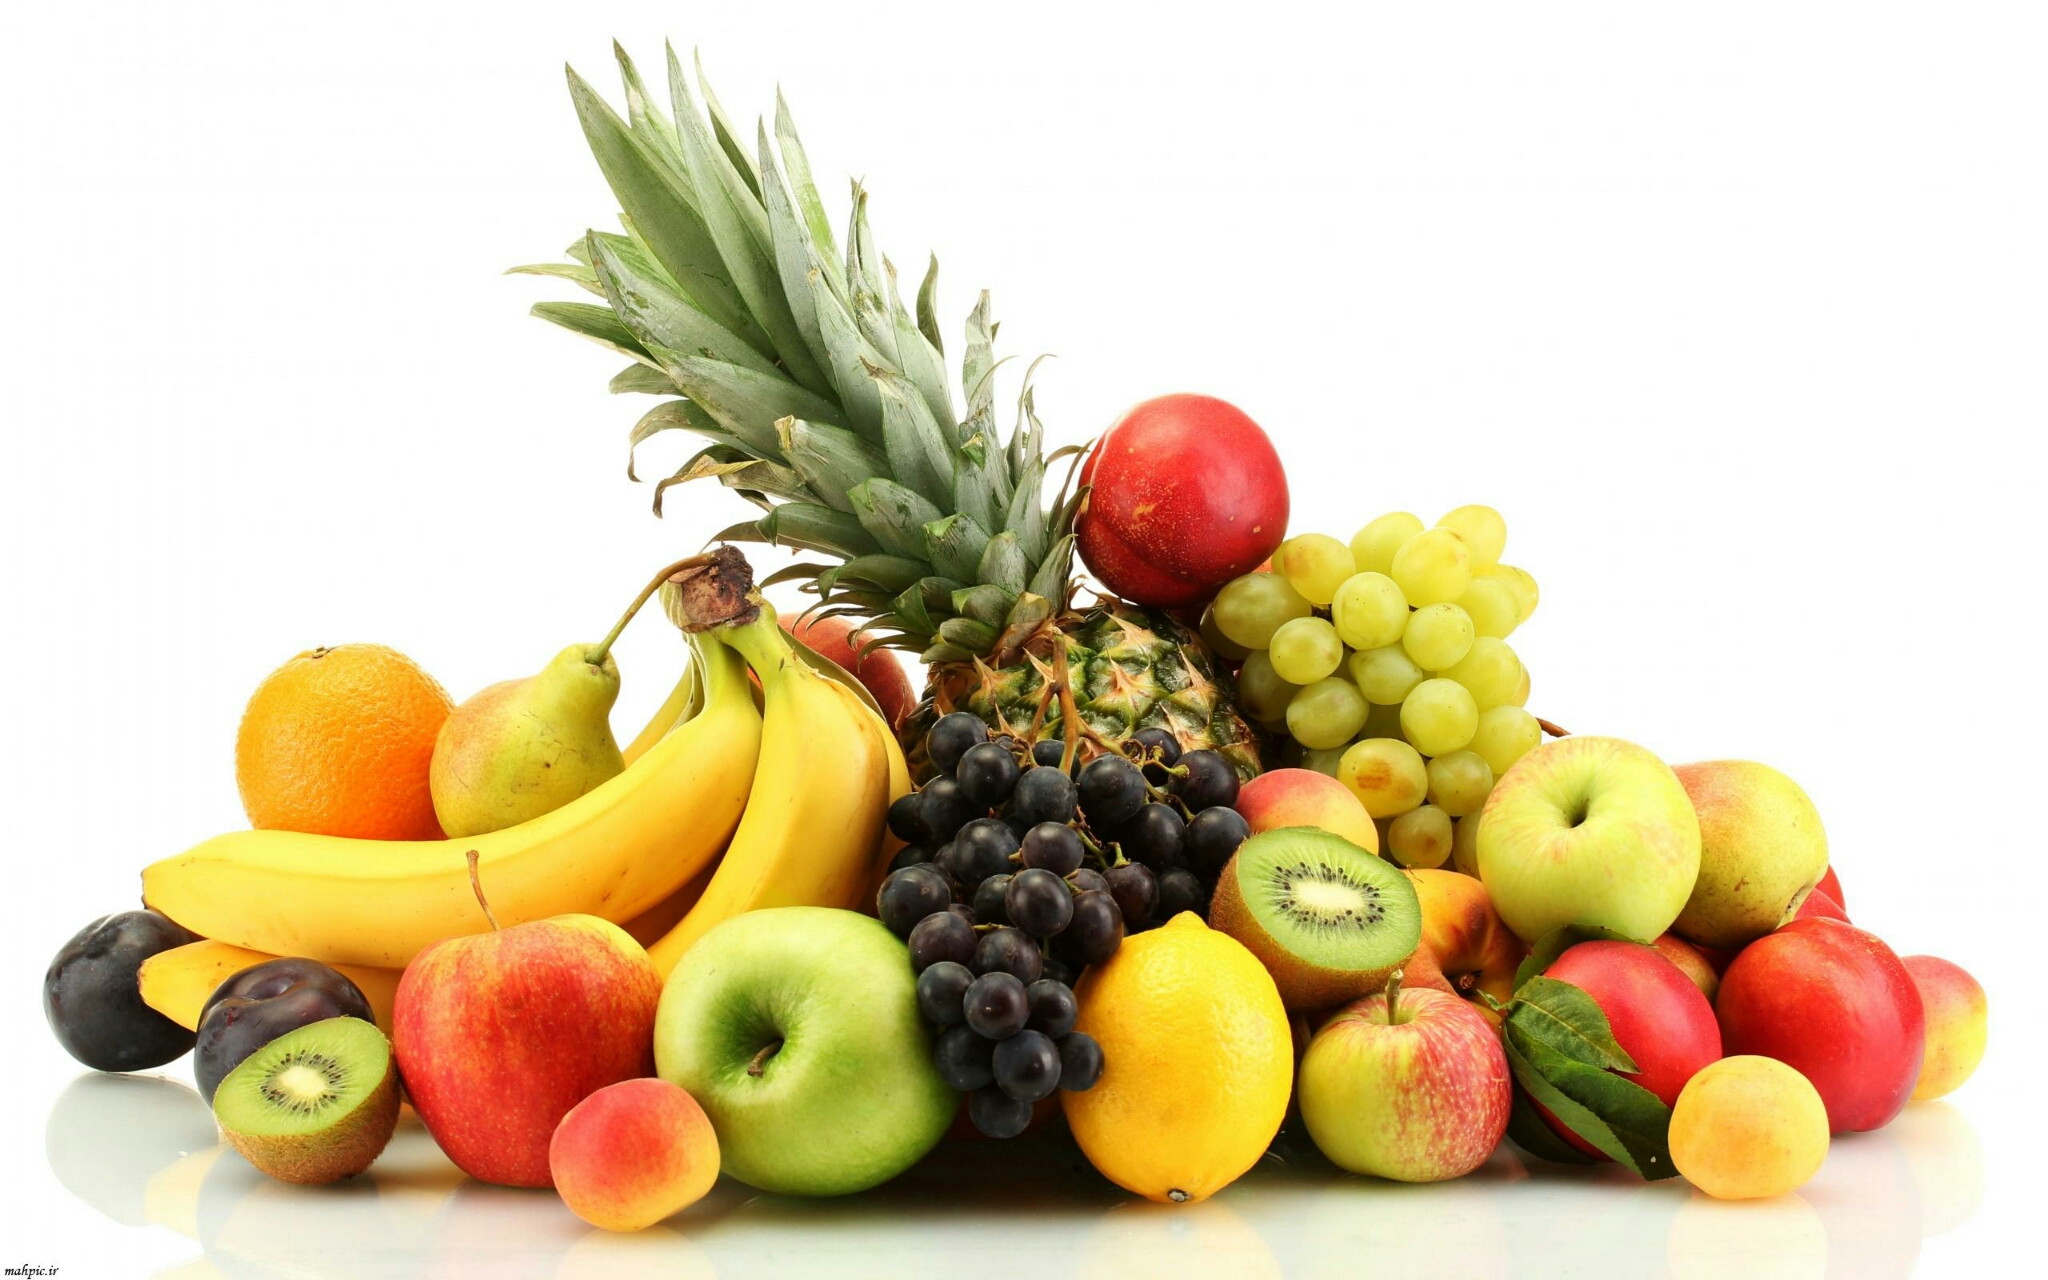 عوارض خطرناک مصرف زیاد میوه